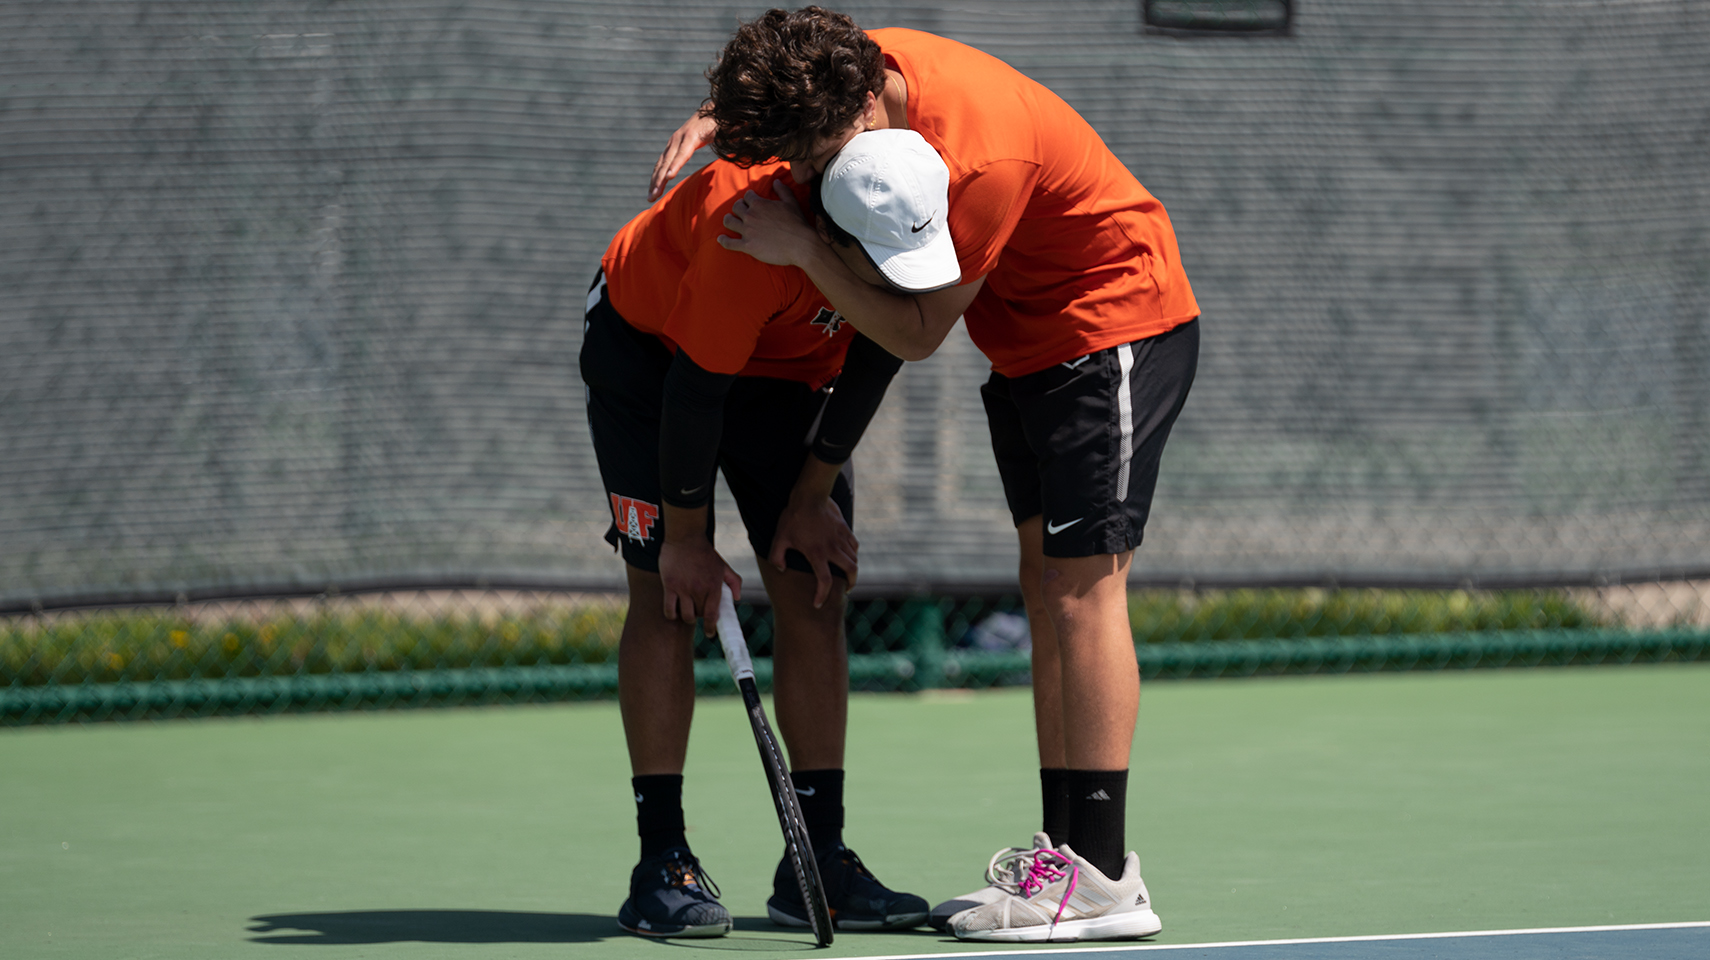 Men's tennis players hugging